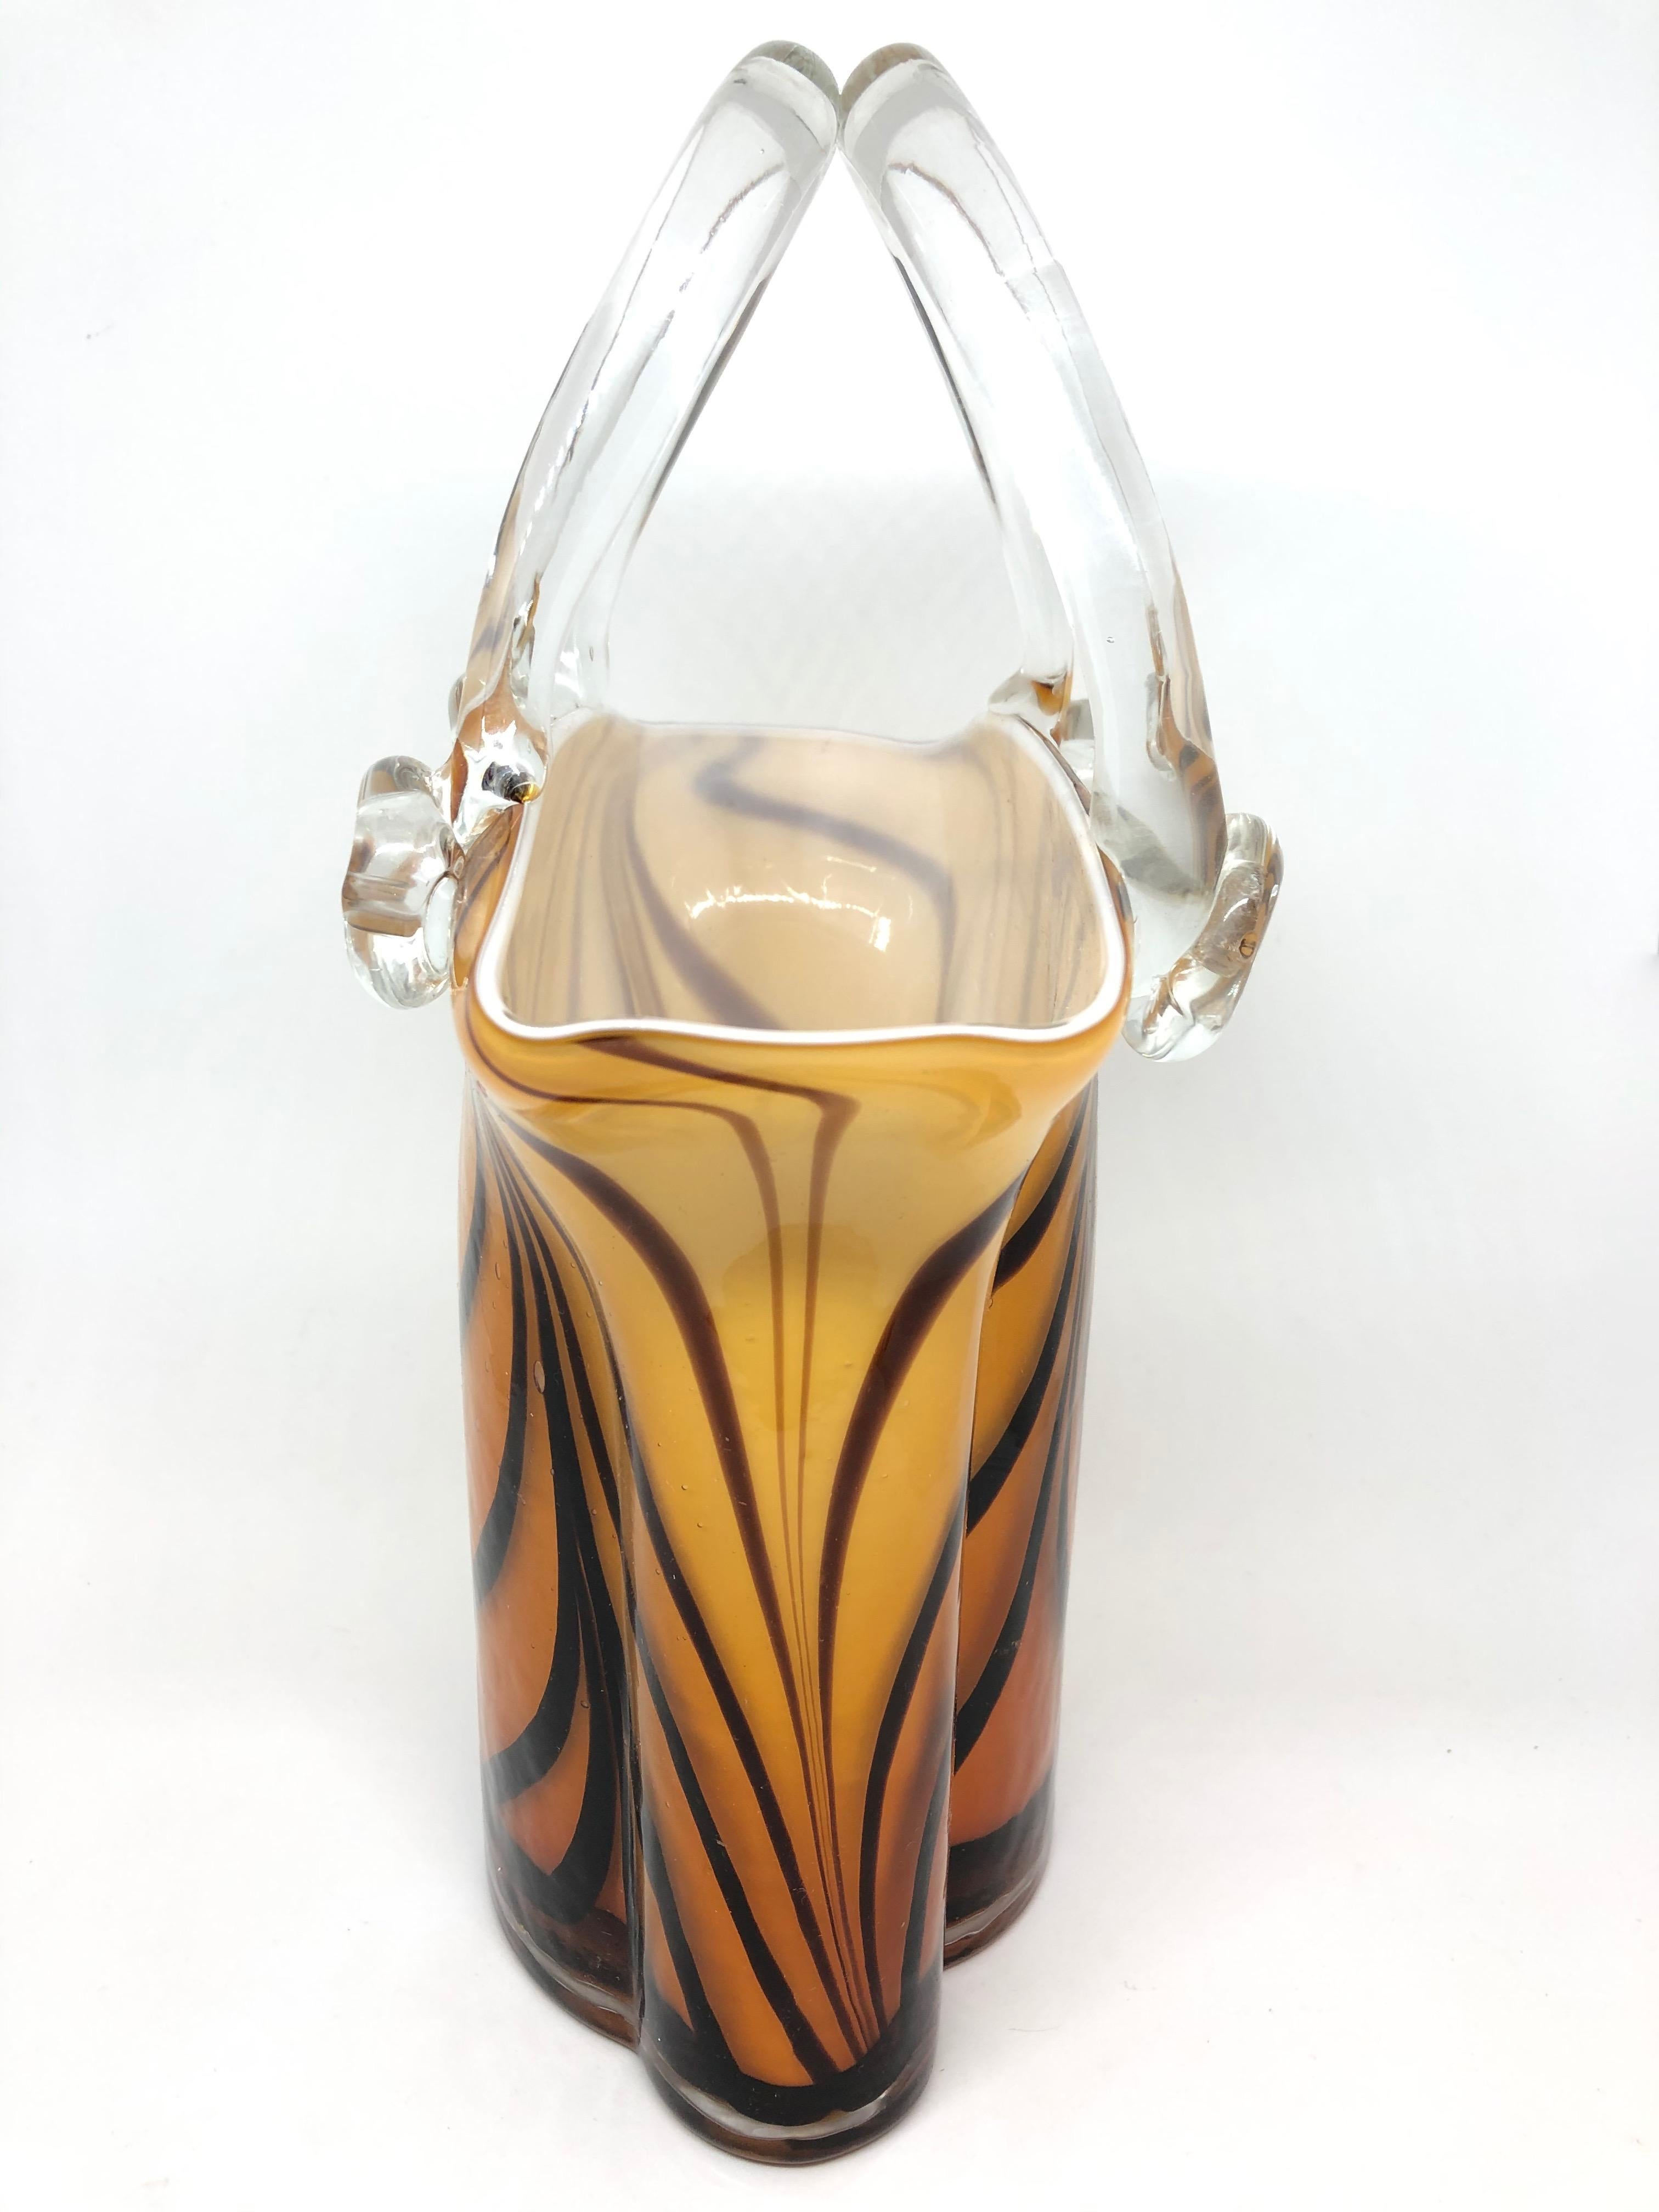 glass bag vase